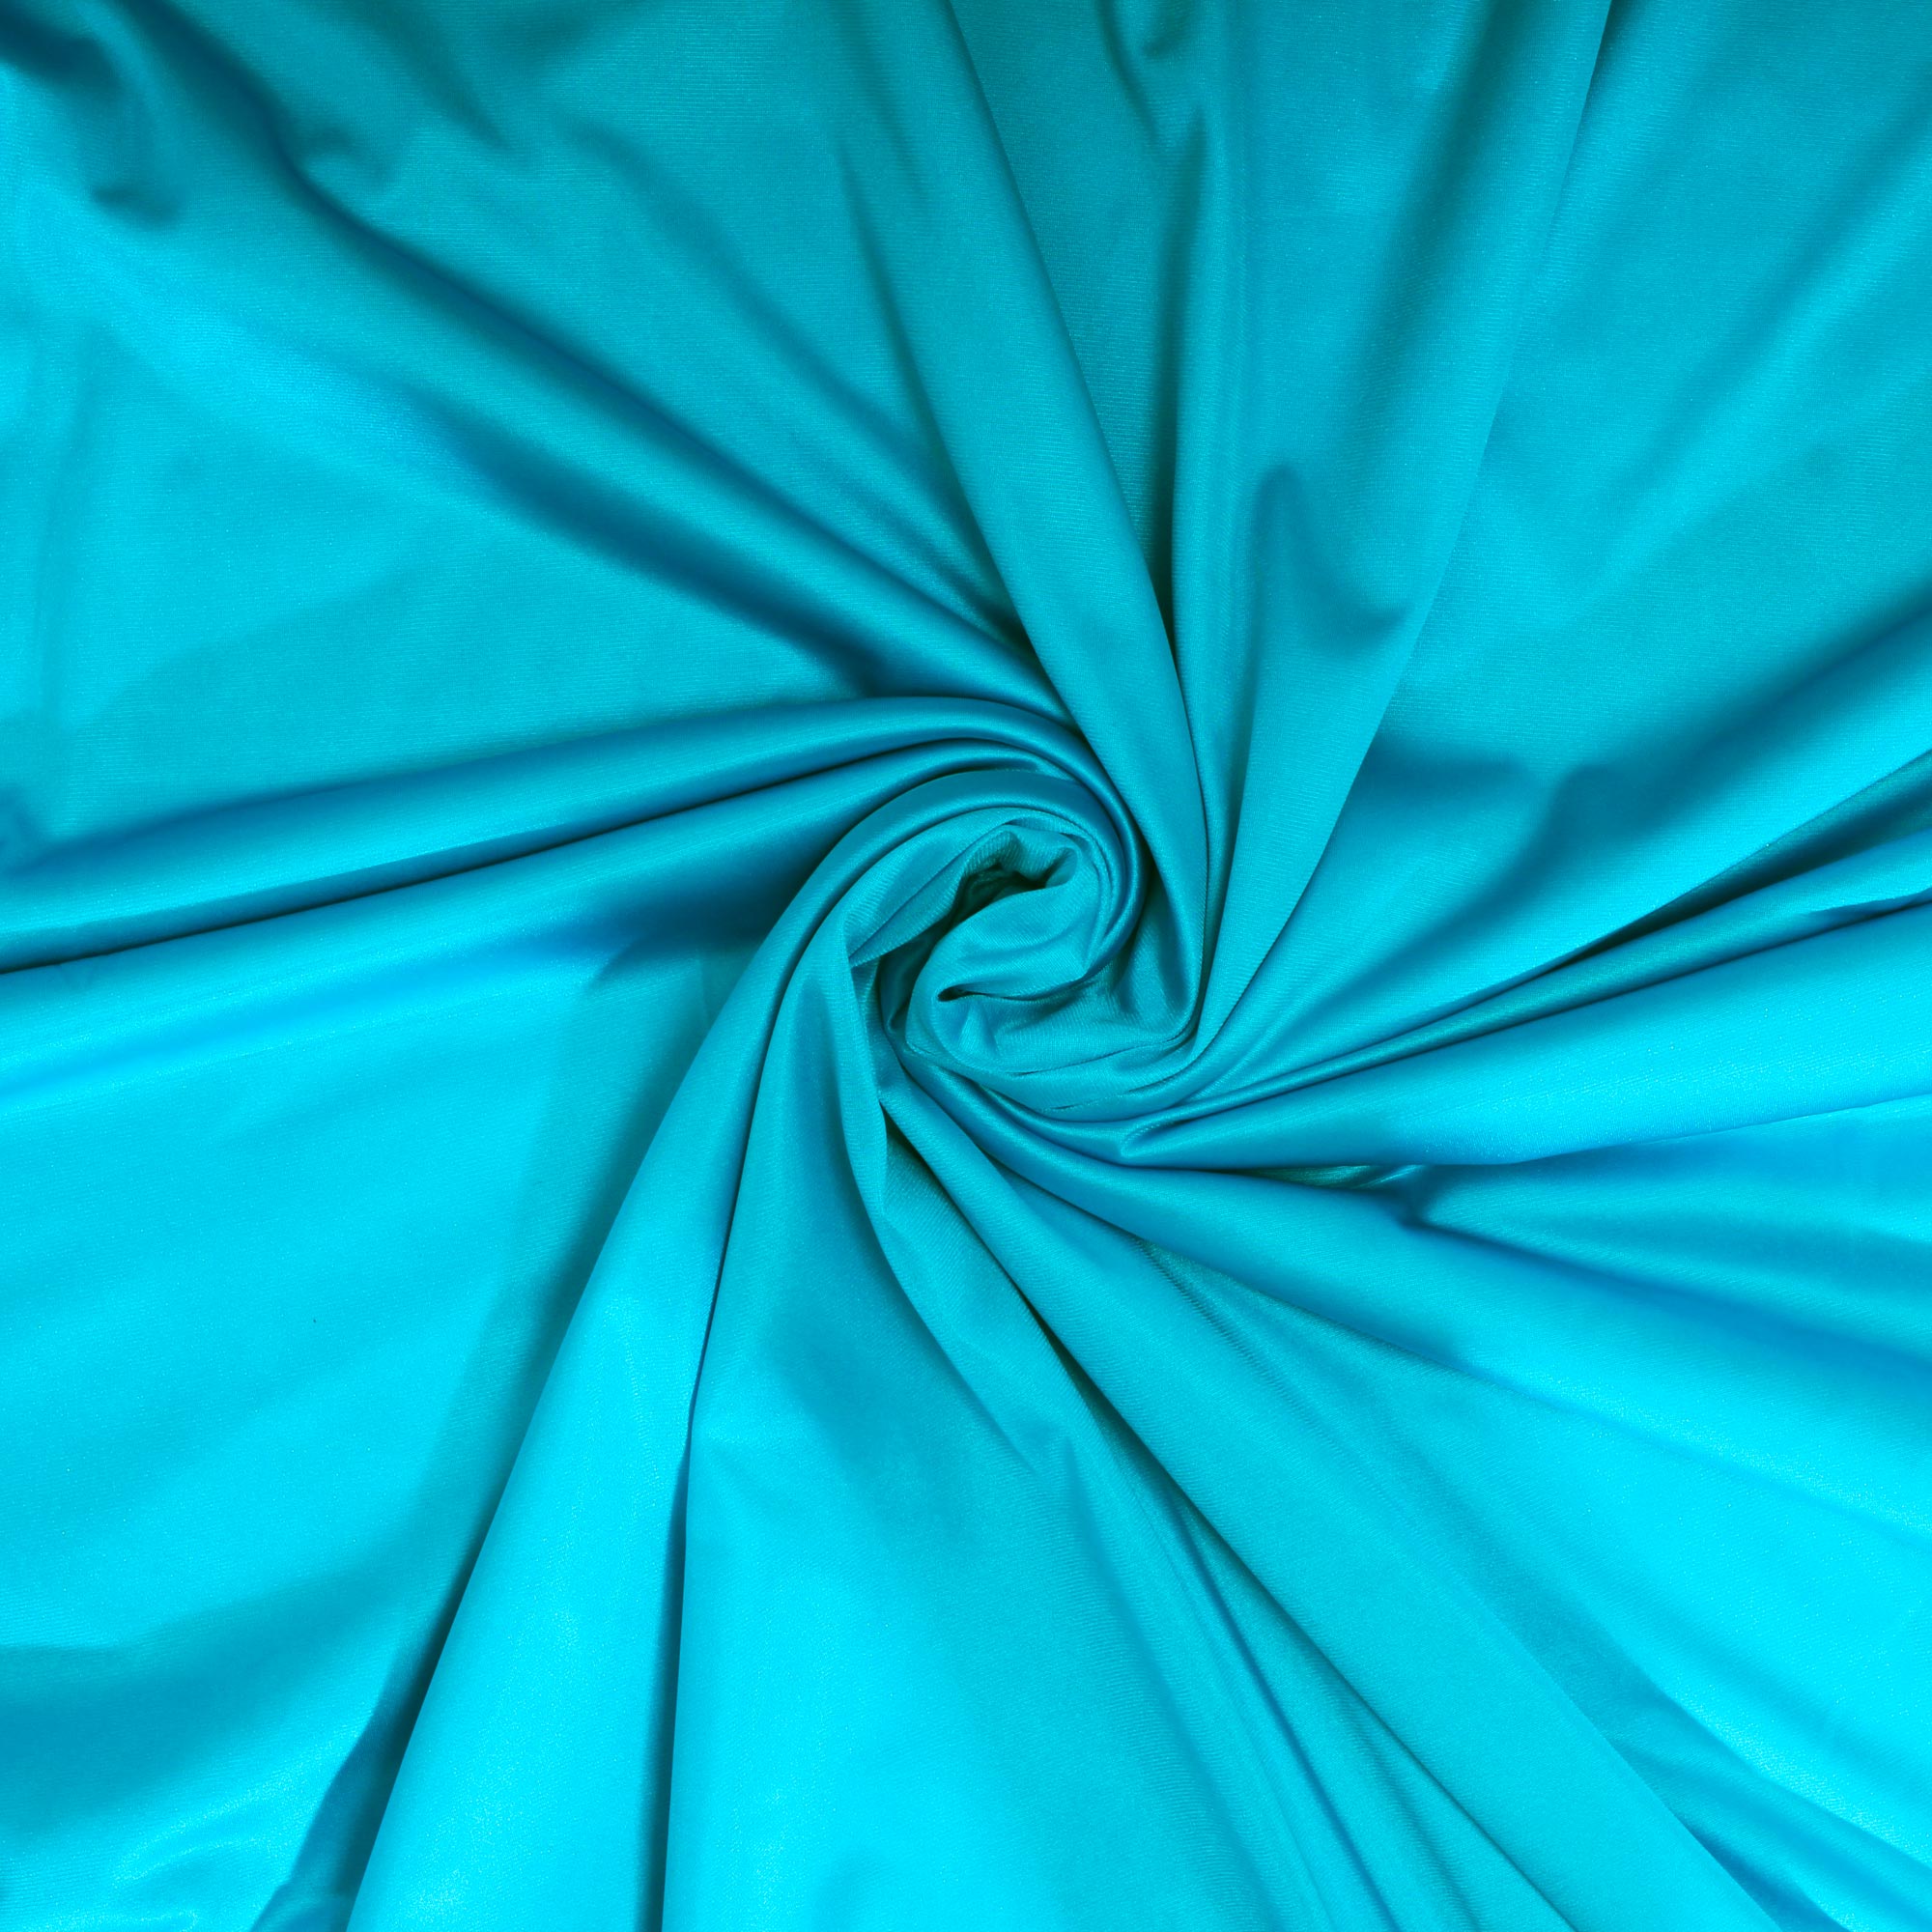 Turquoise hammock close up